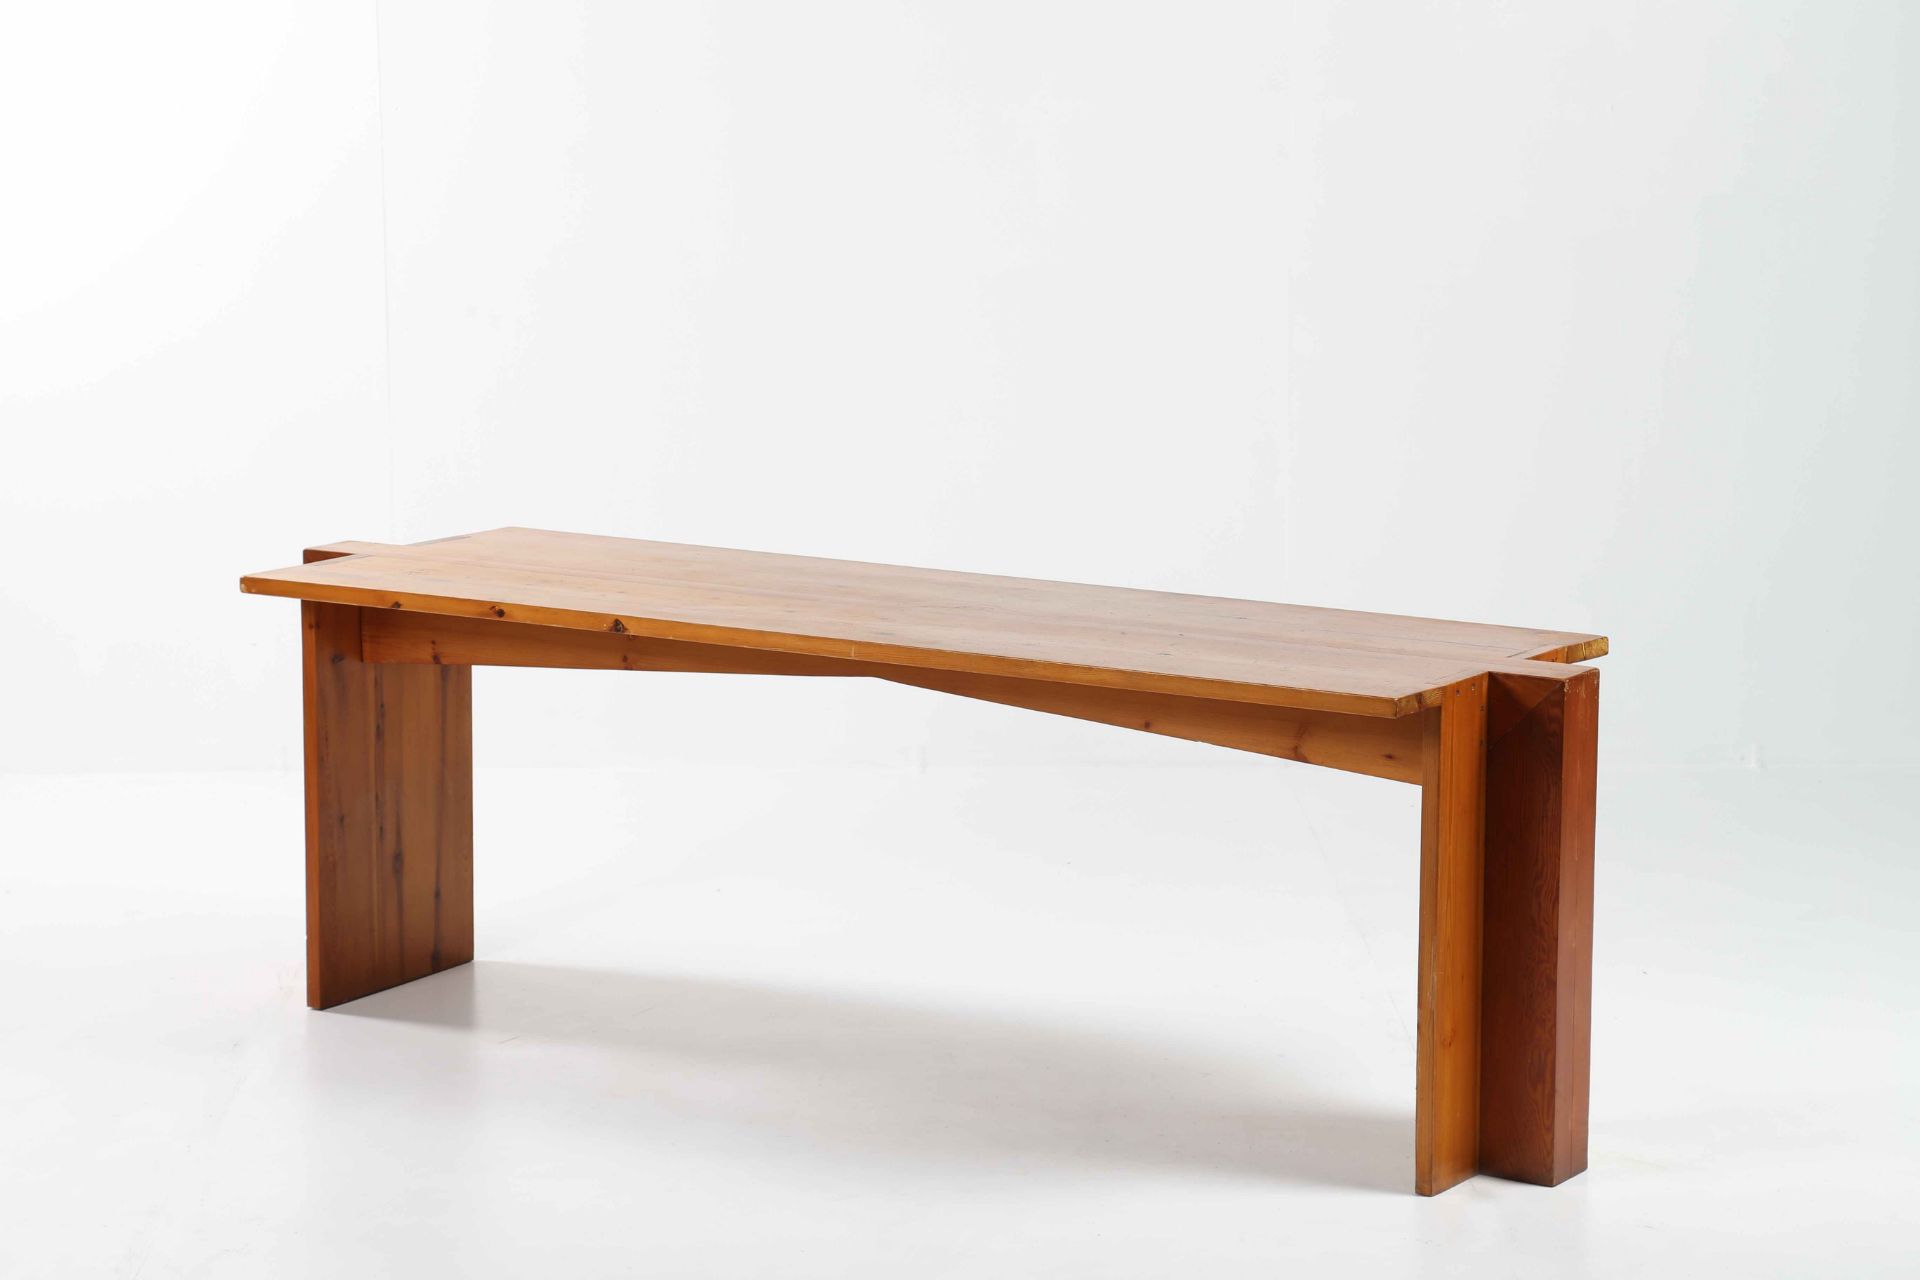 MICHELUCCI GIOVANNI (1891 - 1990)
Very large table-console.
Walnut prototype designed for Delecta